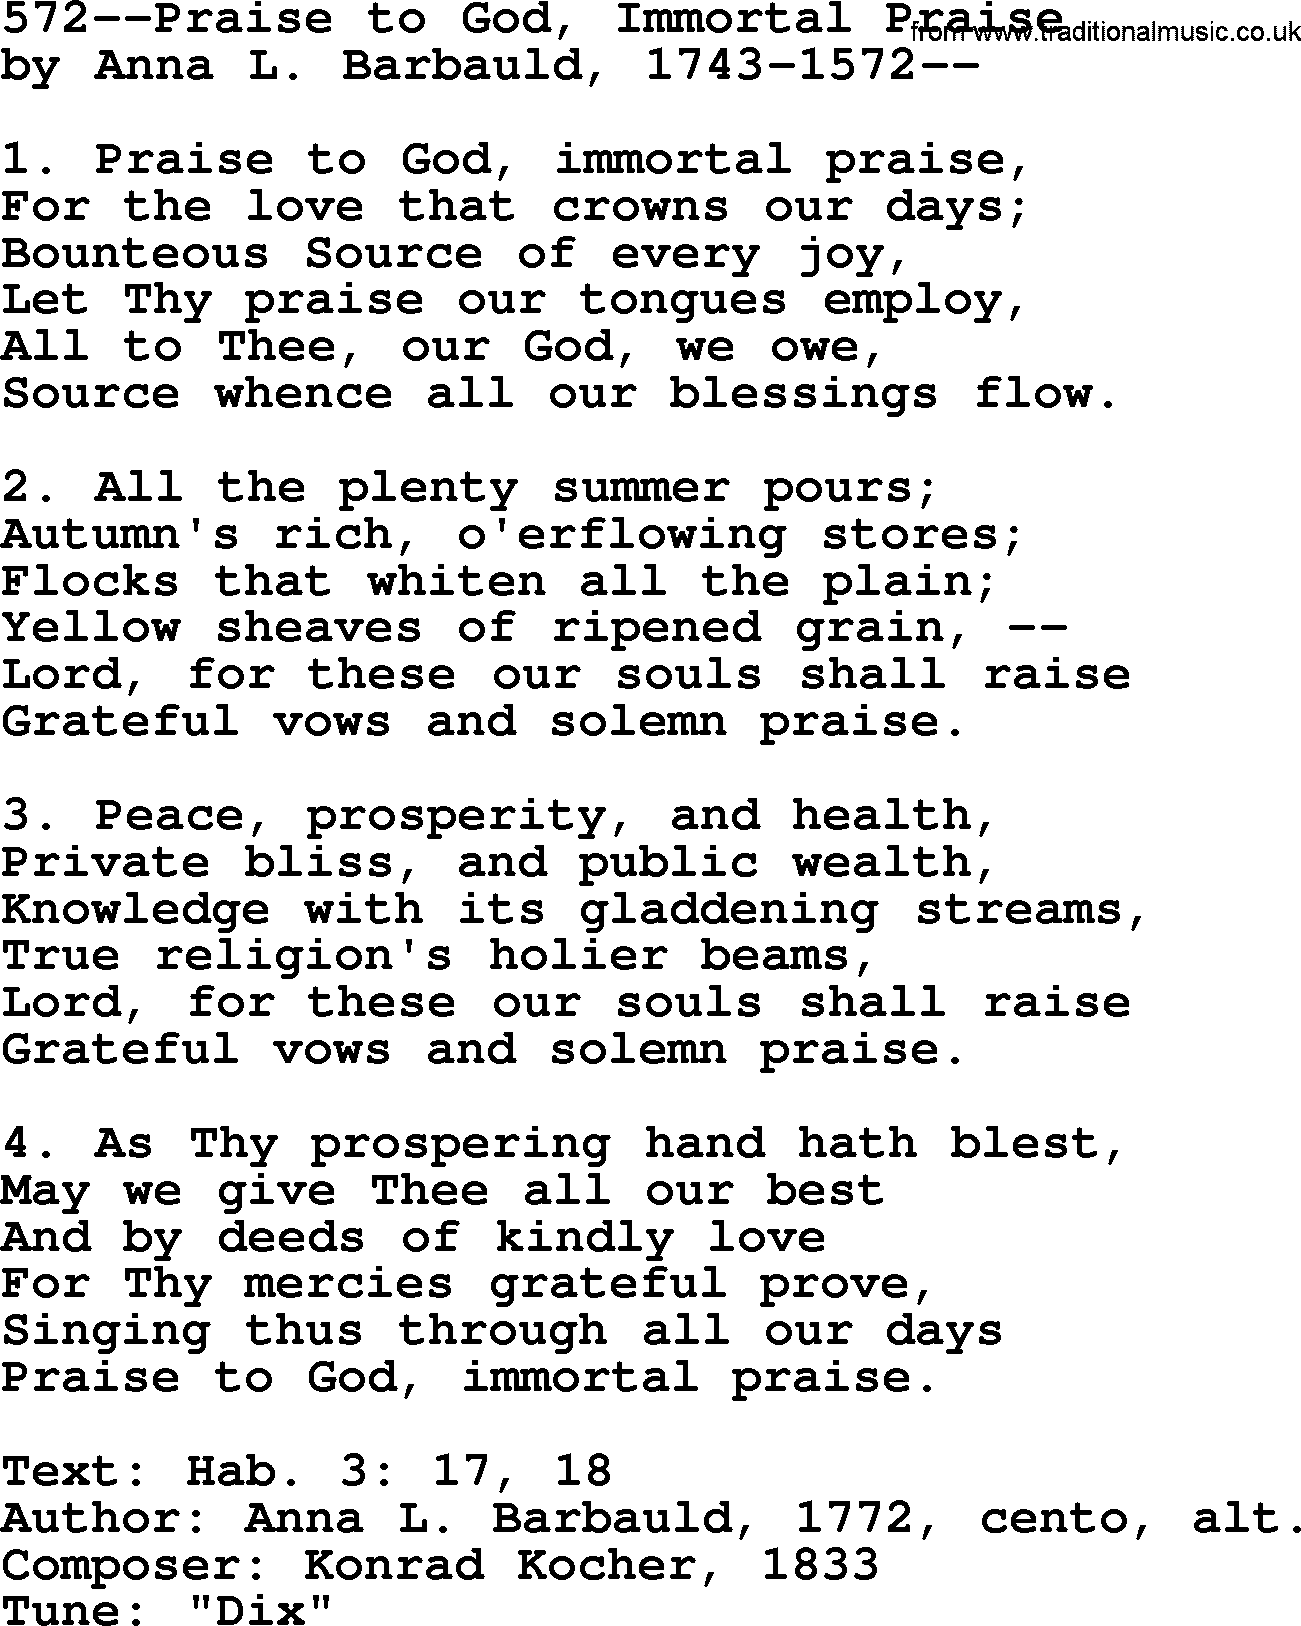 Lutheran Hymn: 572--Praise to God, Immortal Praise.txt lyrics with PDF